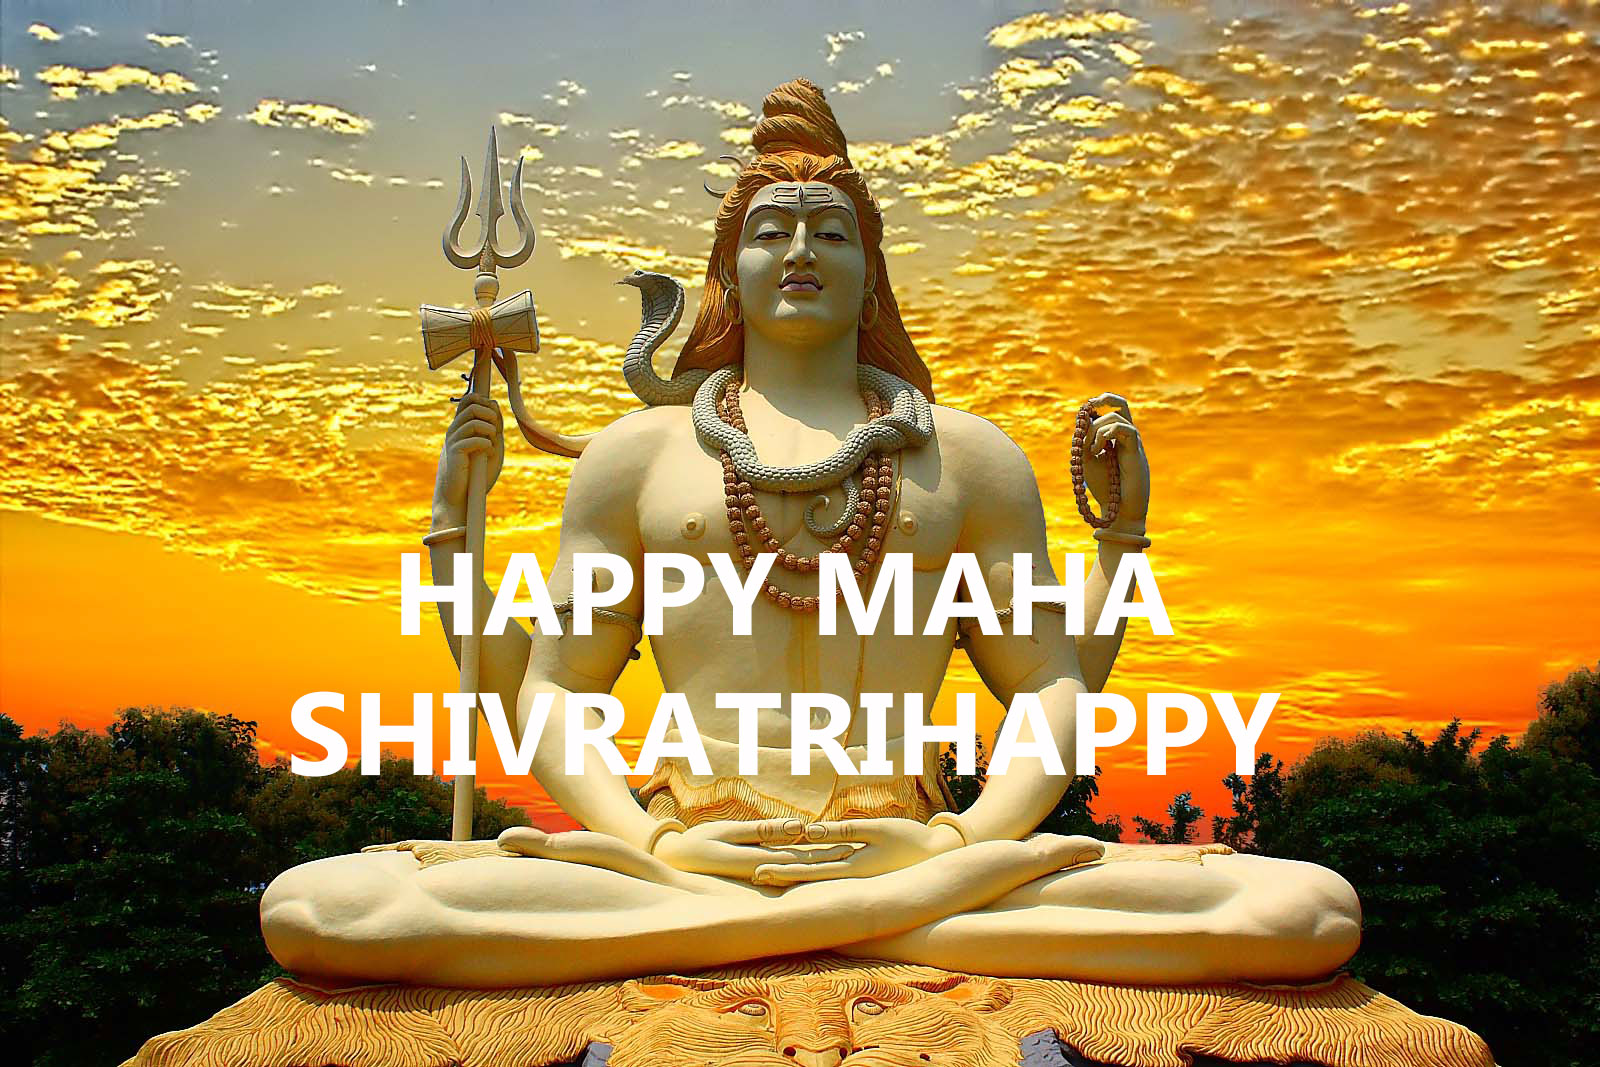 Bhagwan Ji Help me: Happy Maha Shivratri Wallpapers – Download Free  Shivratri 2013 Wallpapers,Images,Pics